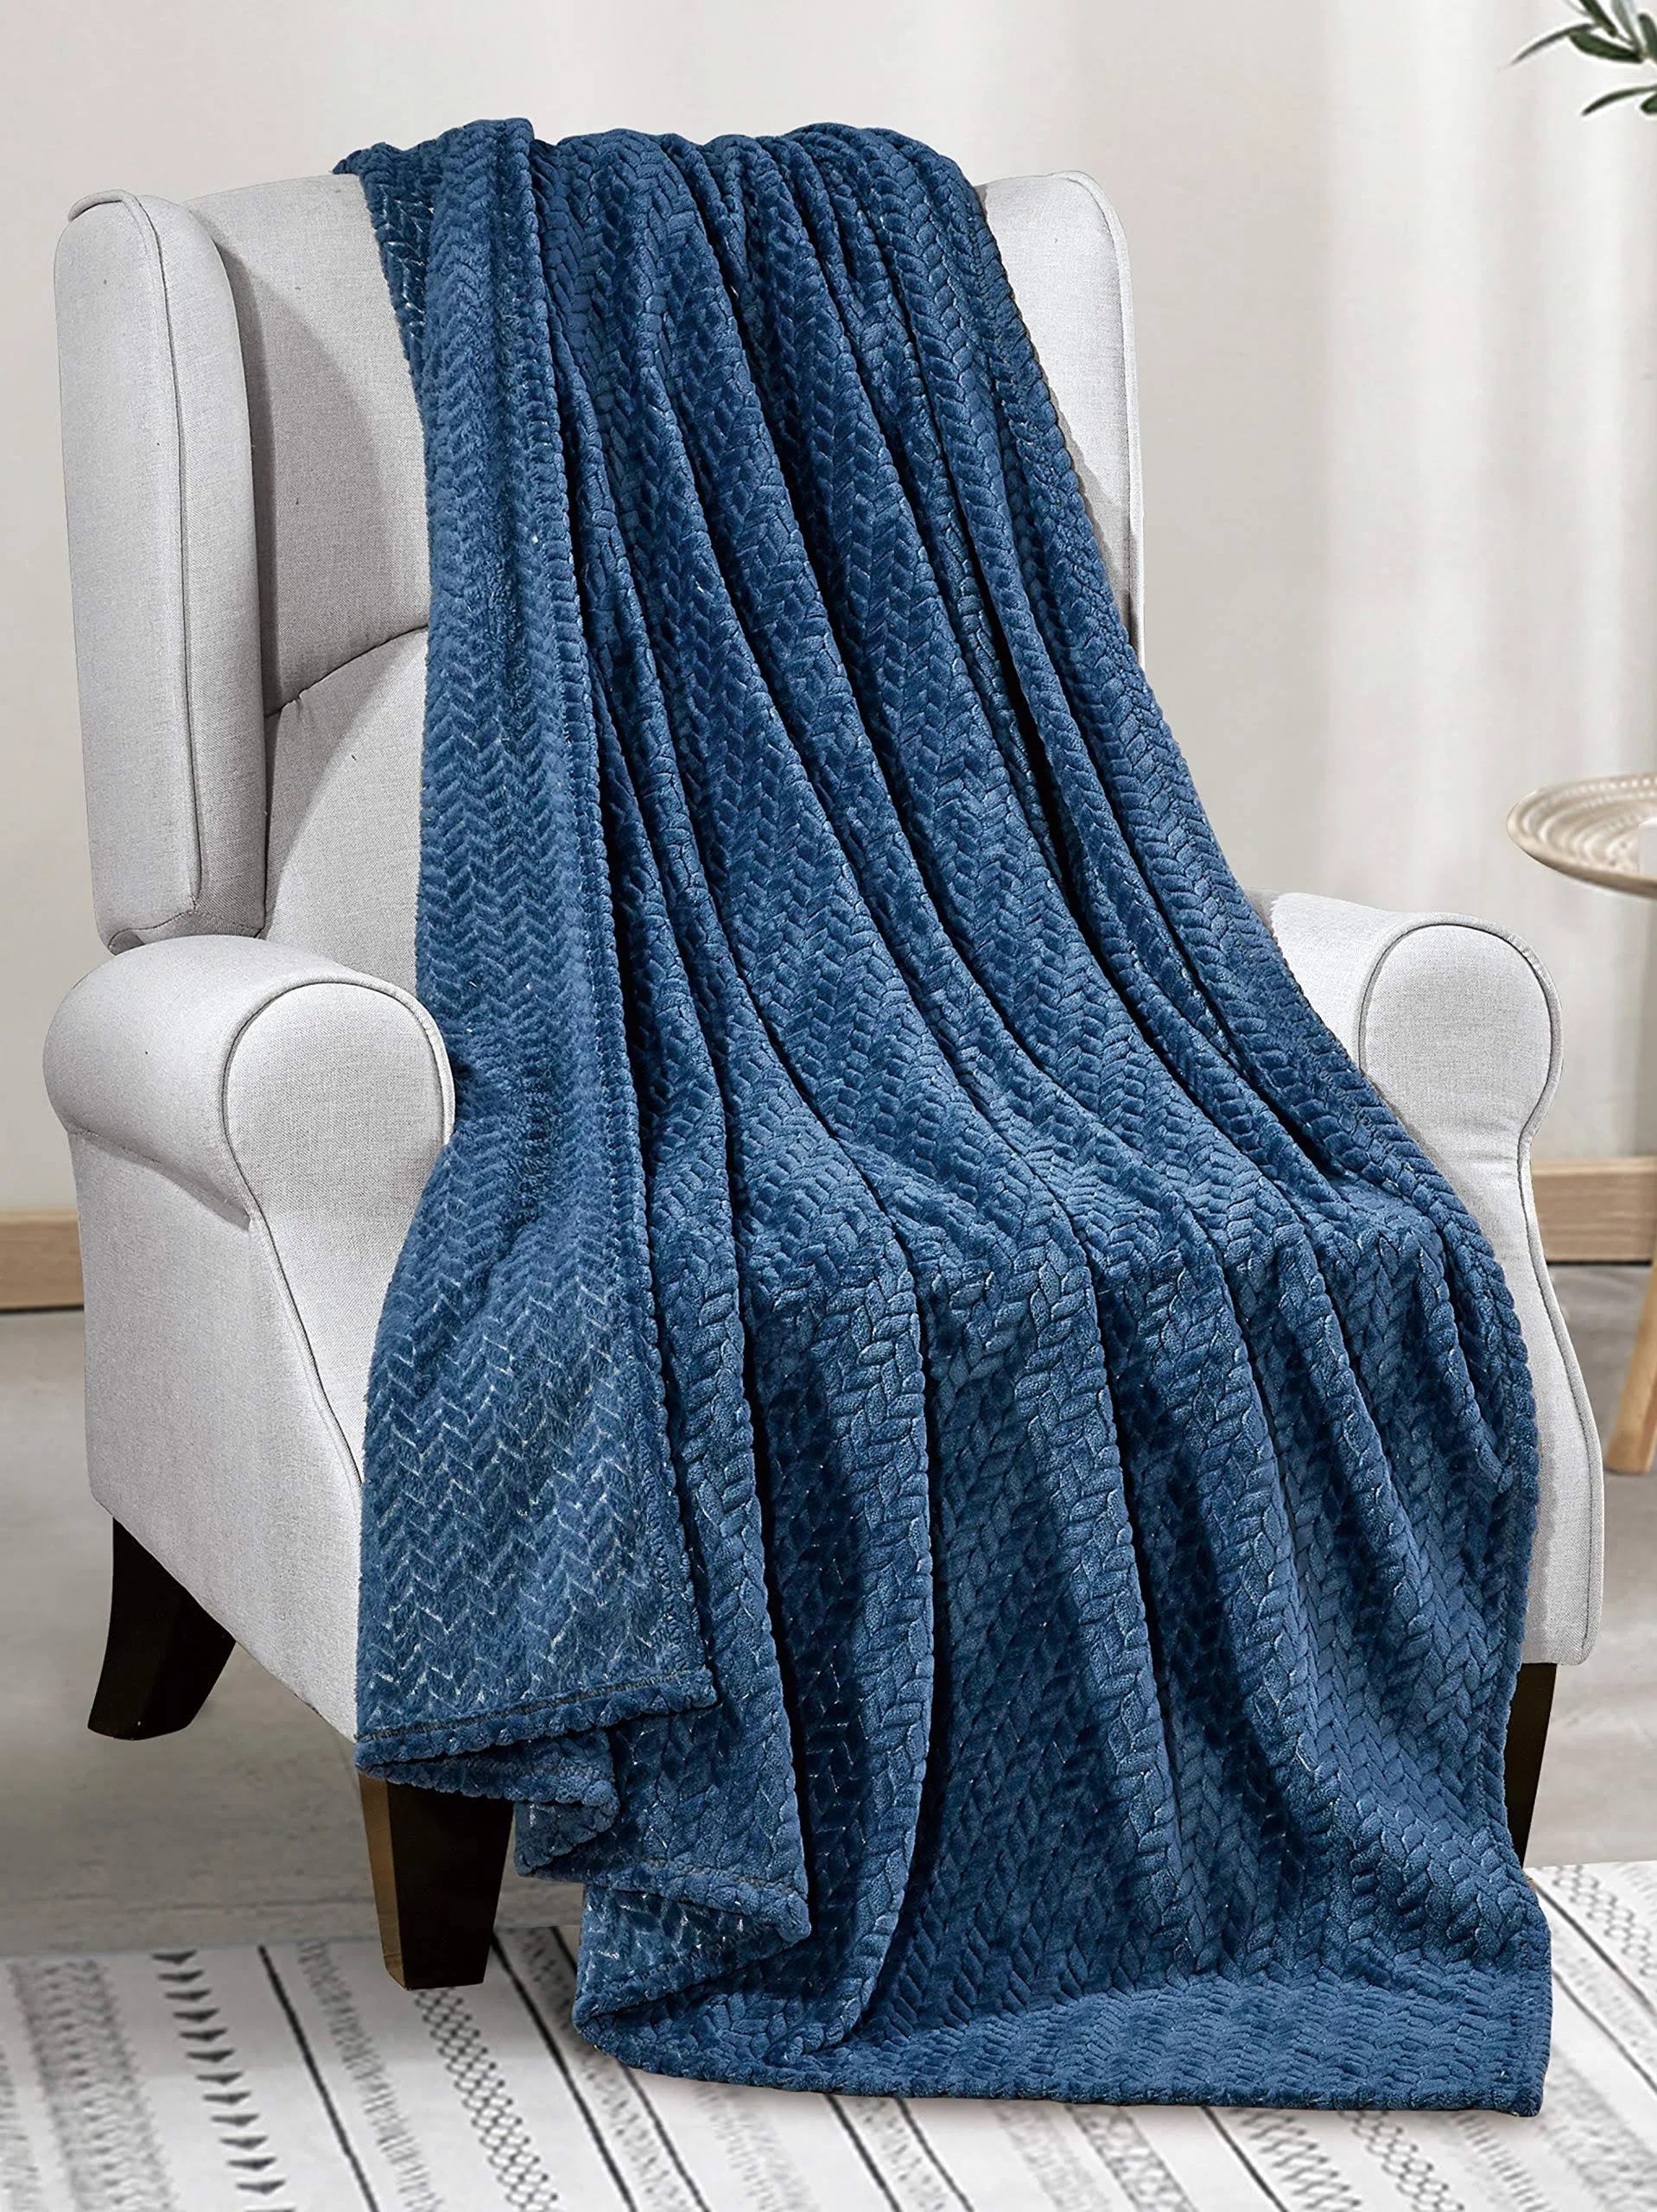 Extra Soft Oversized Chevron Braided Throw Blanket | Image